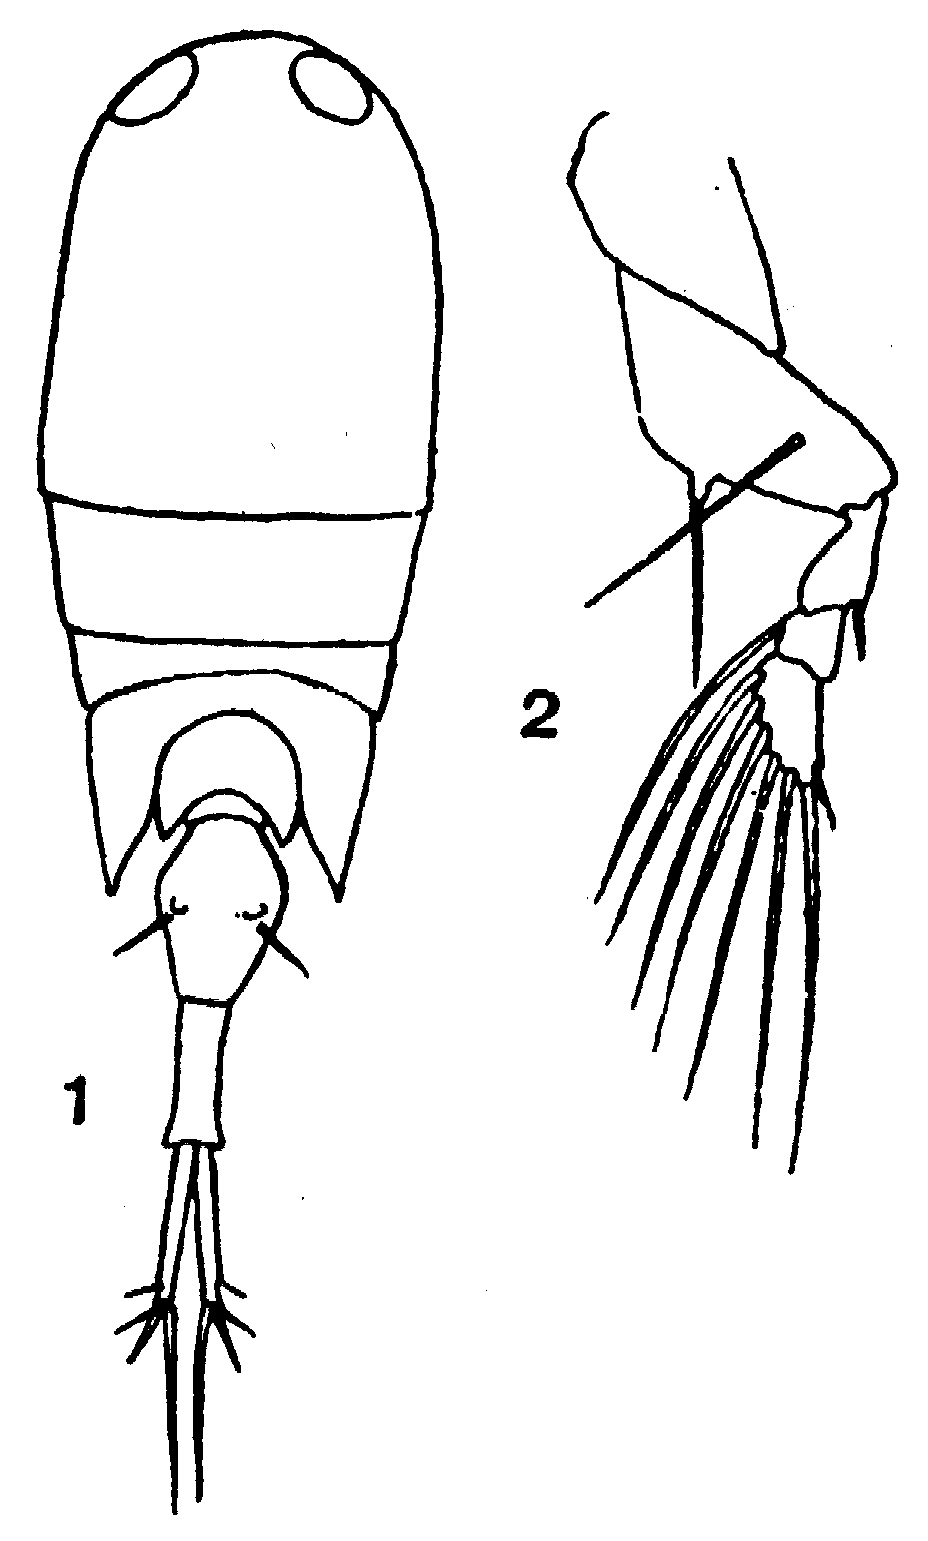 Species Corycaeus (Onychocorycaeus) agilis - Plate 16 of morphological figures